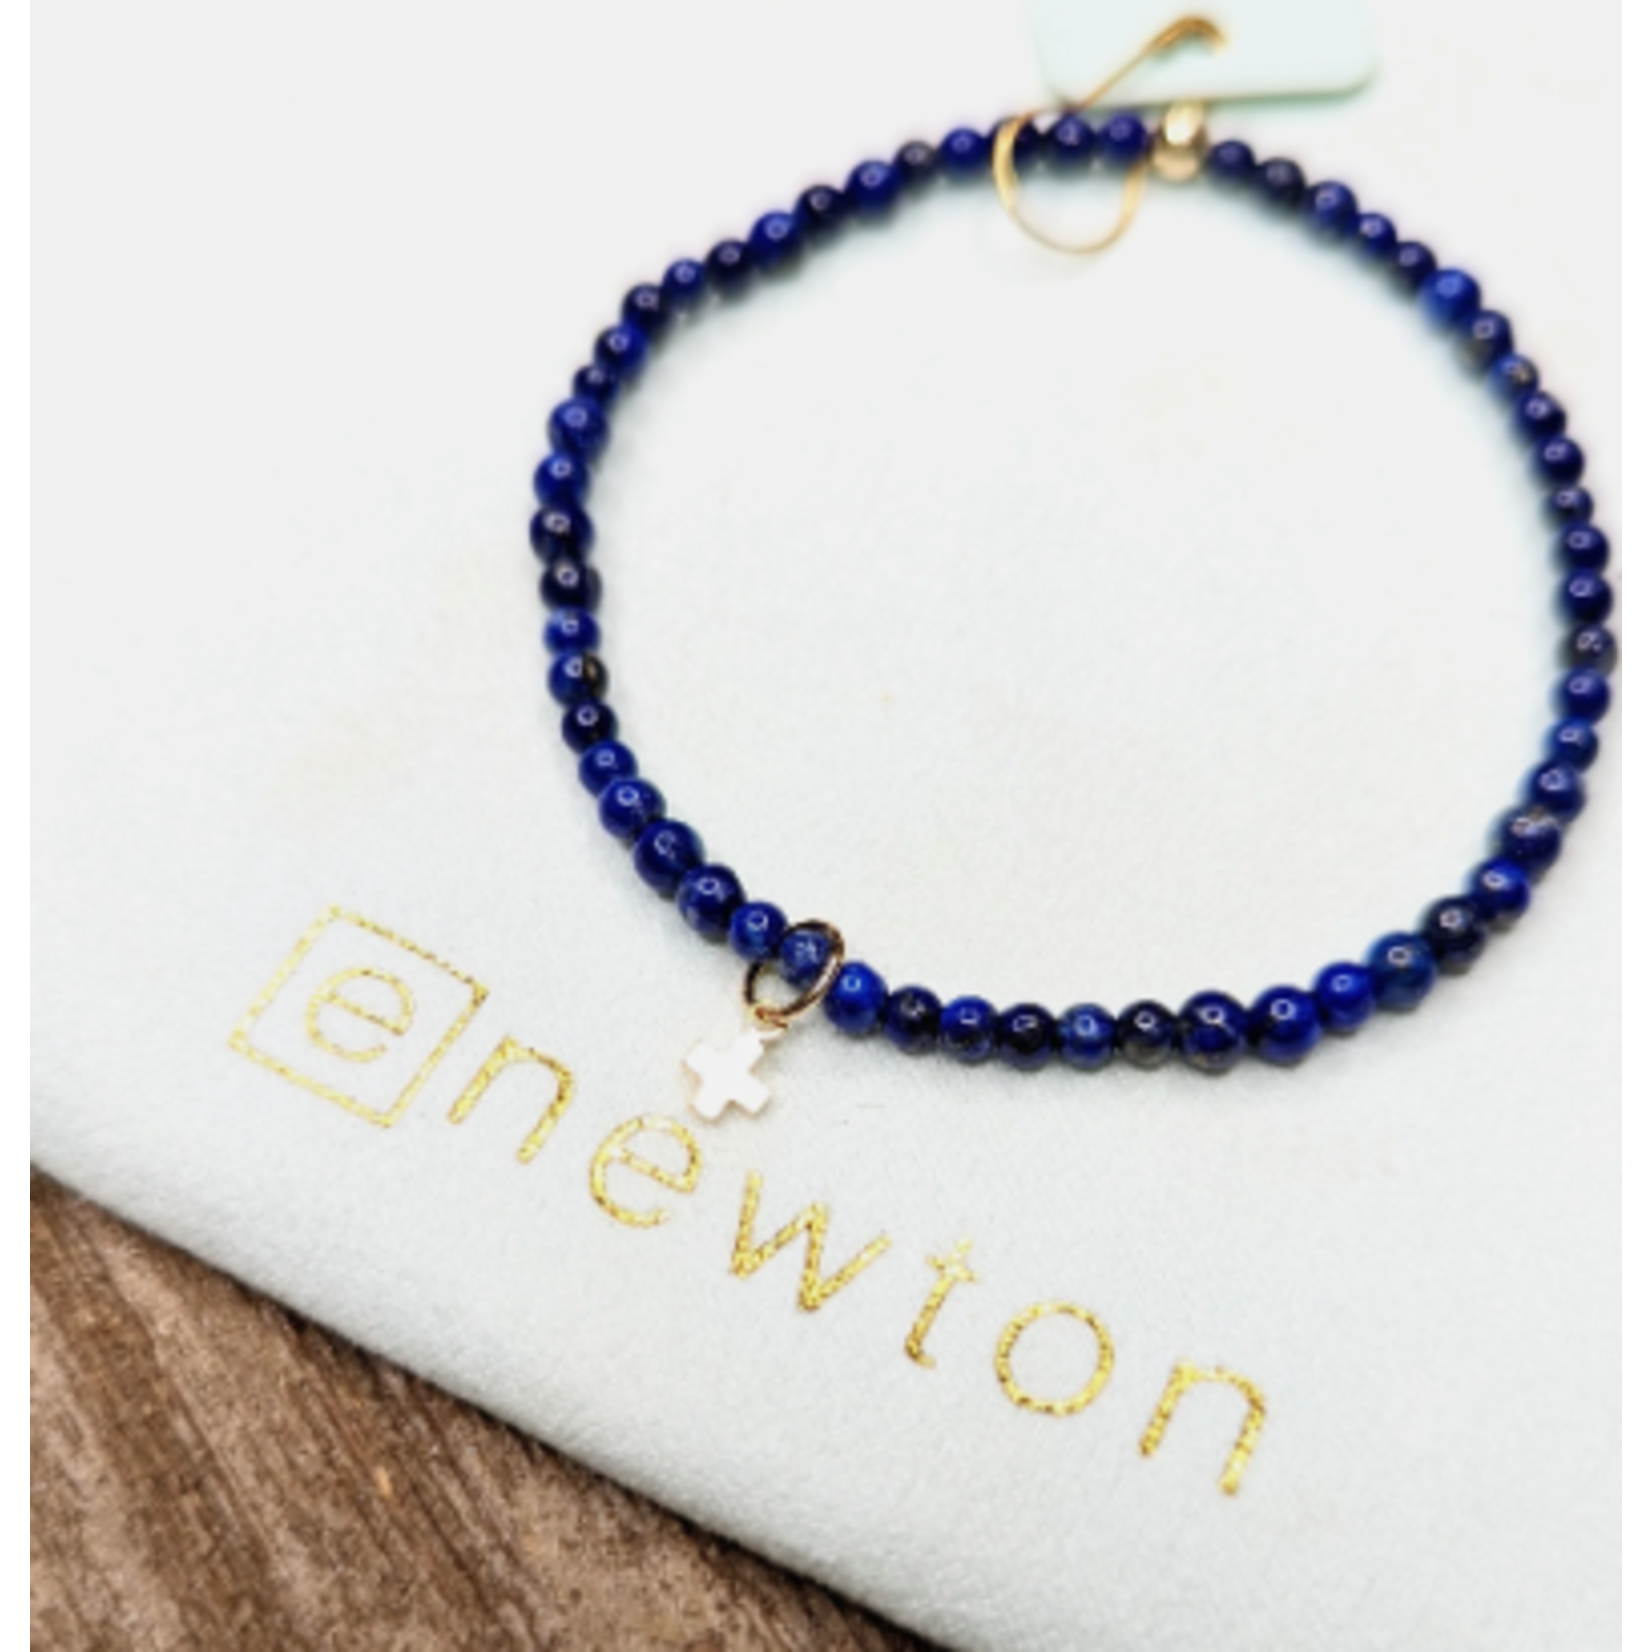 enewton Gemstone 3mm Bead Bracelet - Lapis - Signature Cross Smal Gold Charm